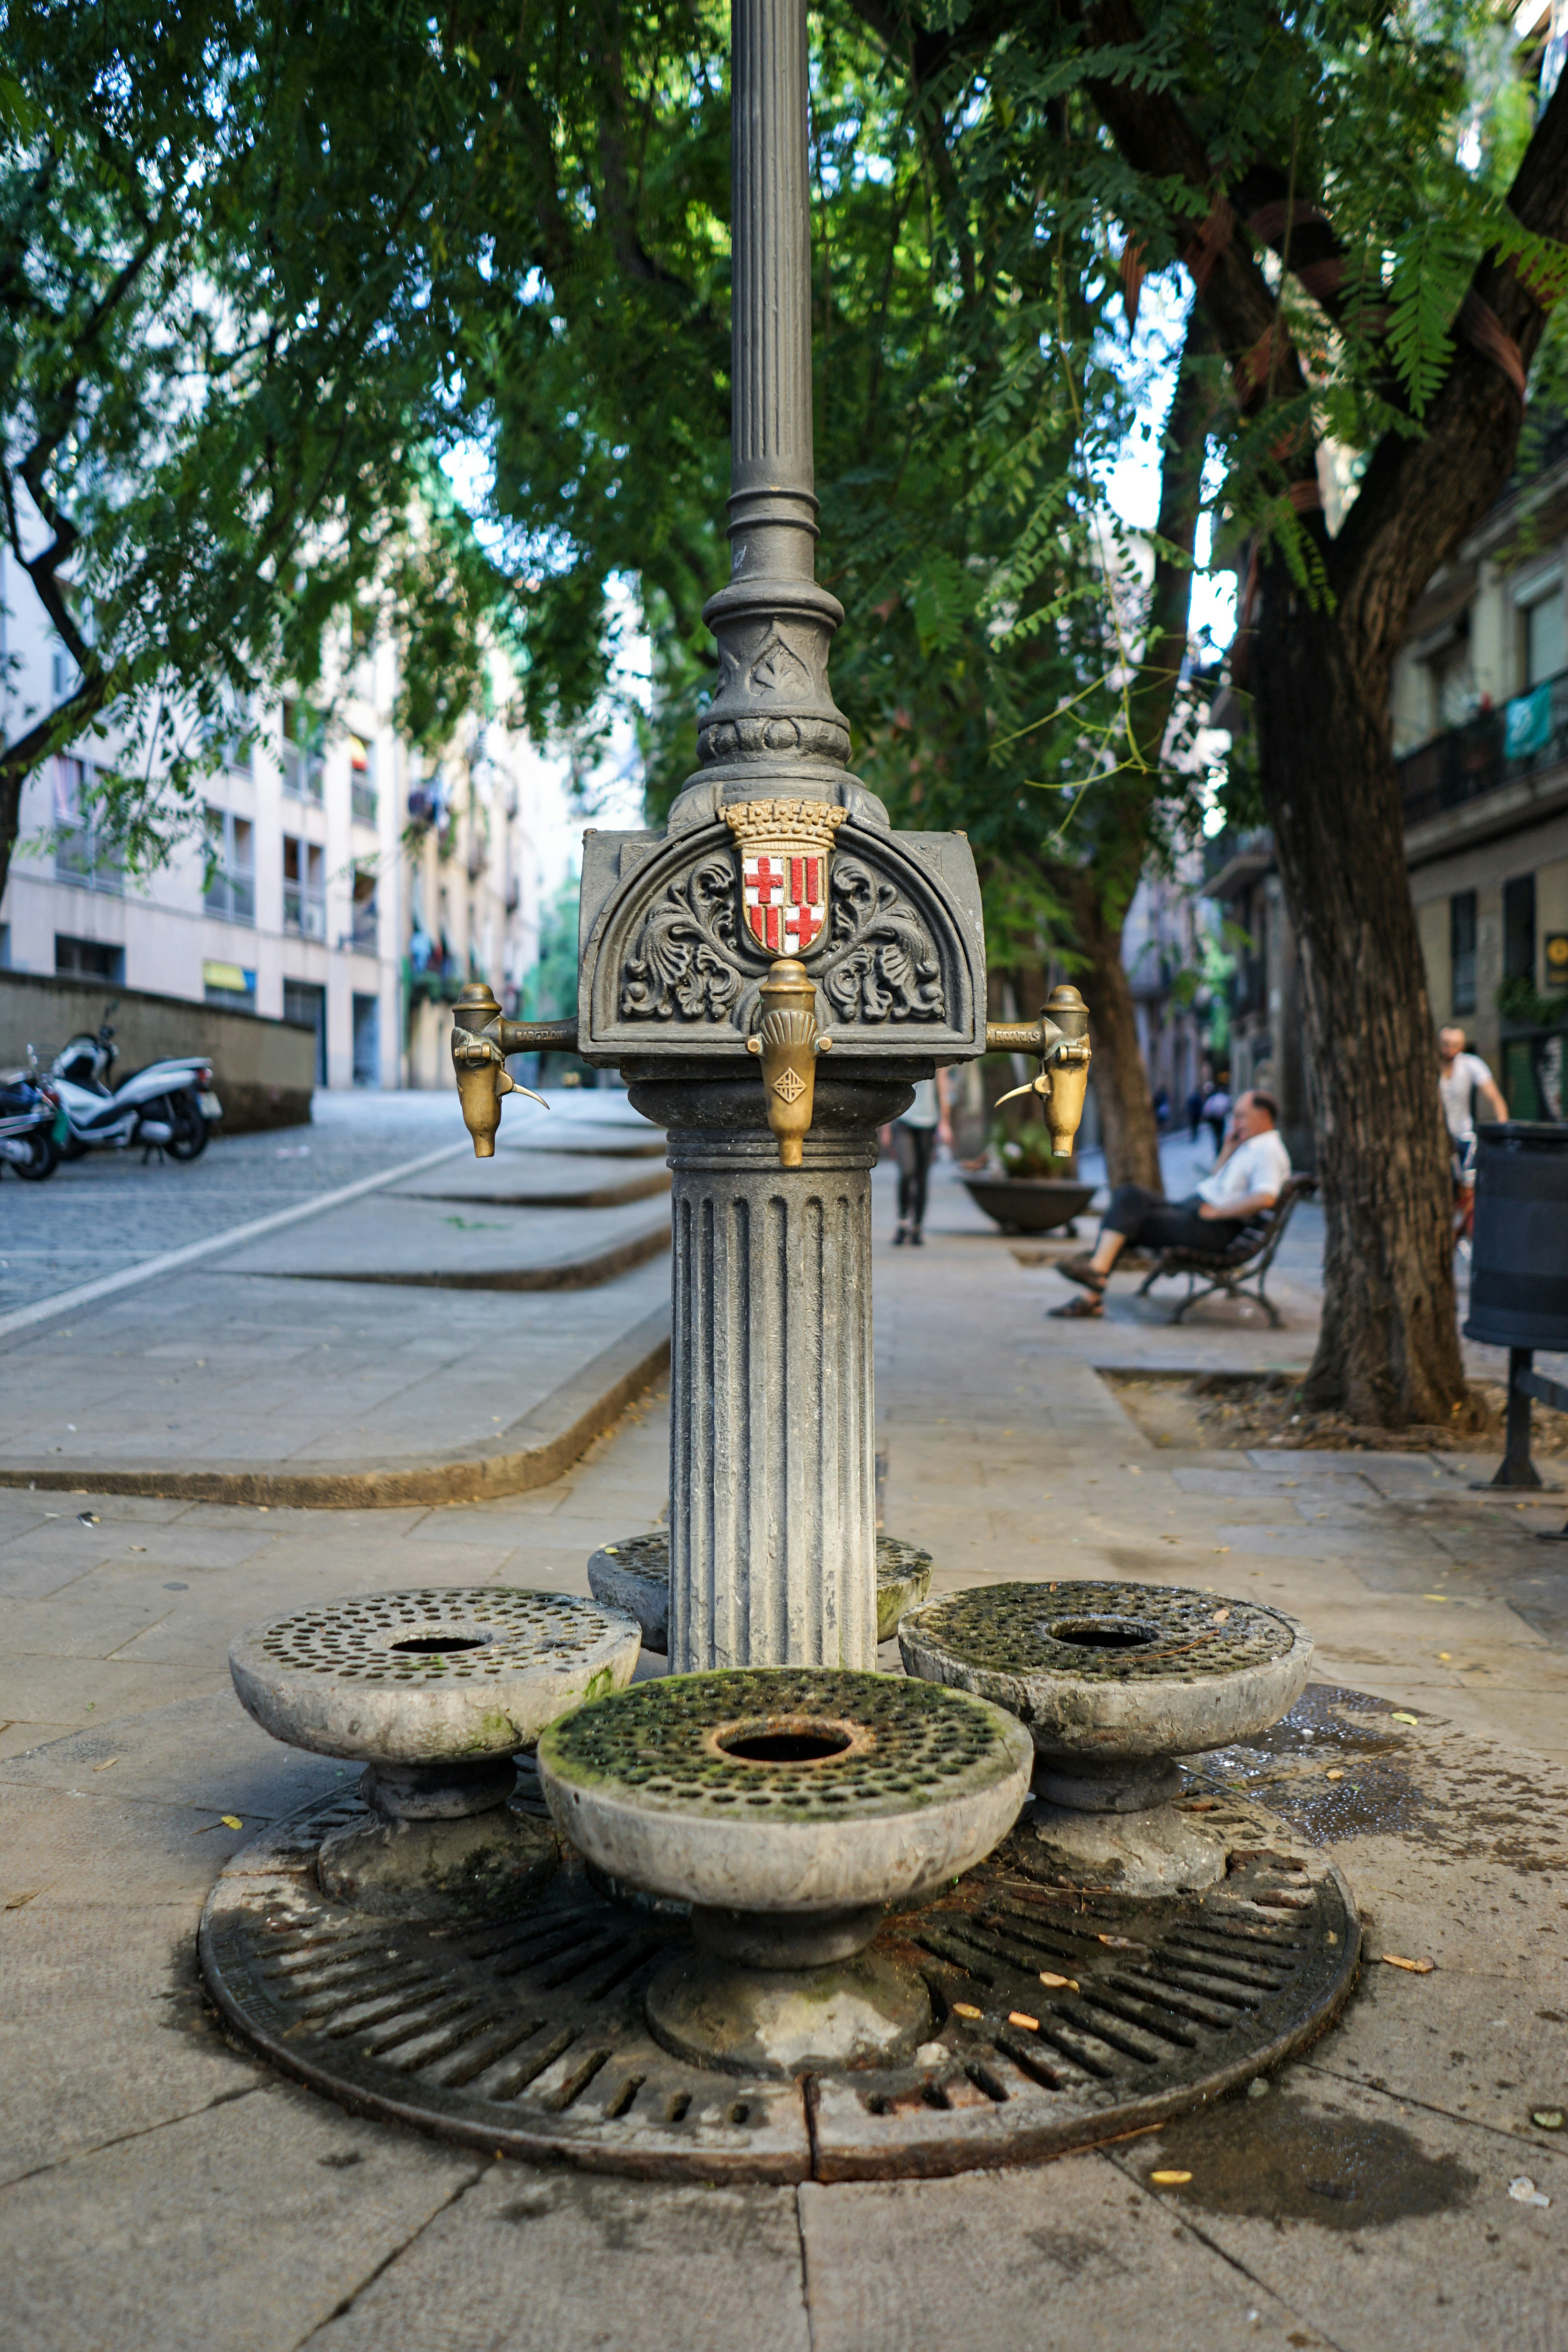 Barcelona’s tap water